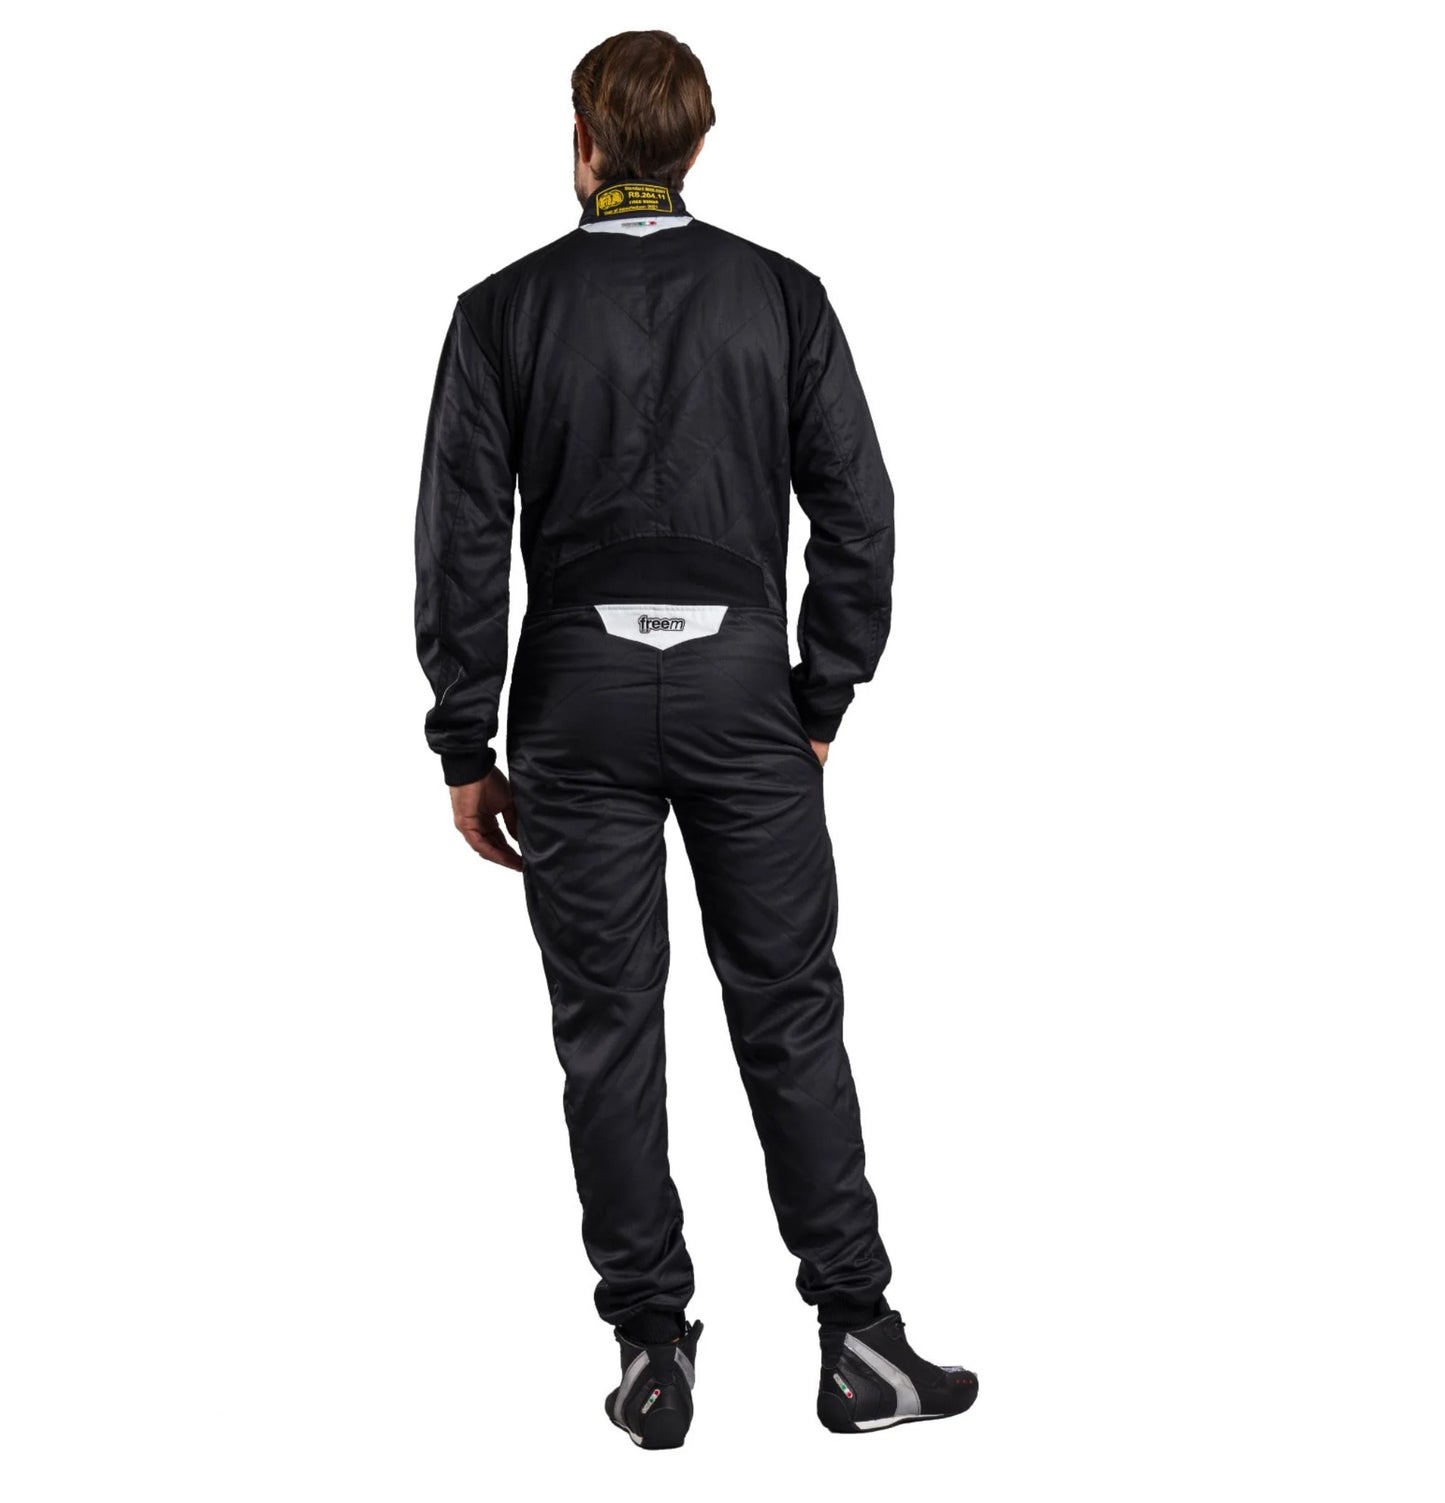 A20 Motorsport Suit Standard